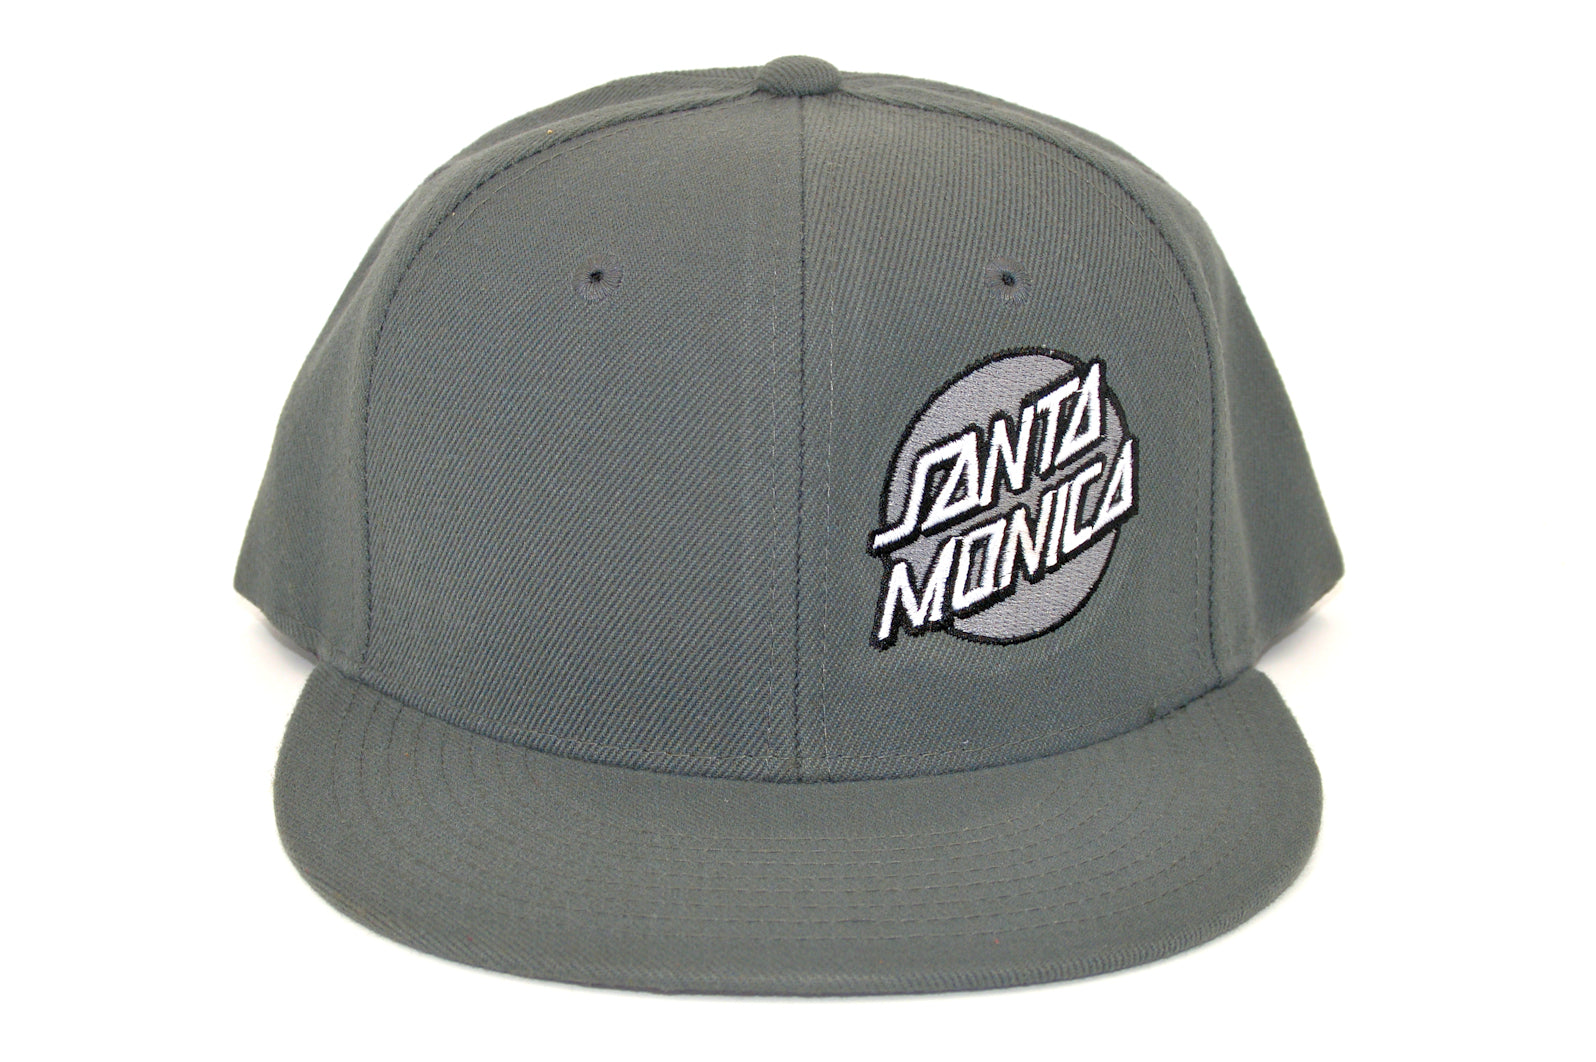 SANTA MONICA CIRCLE HAT - Series 2